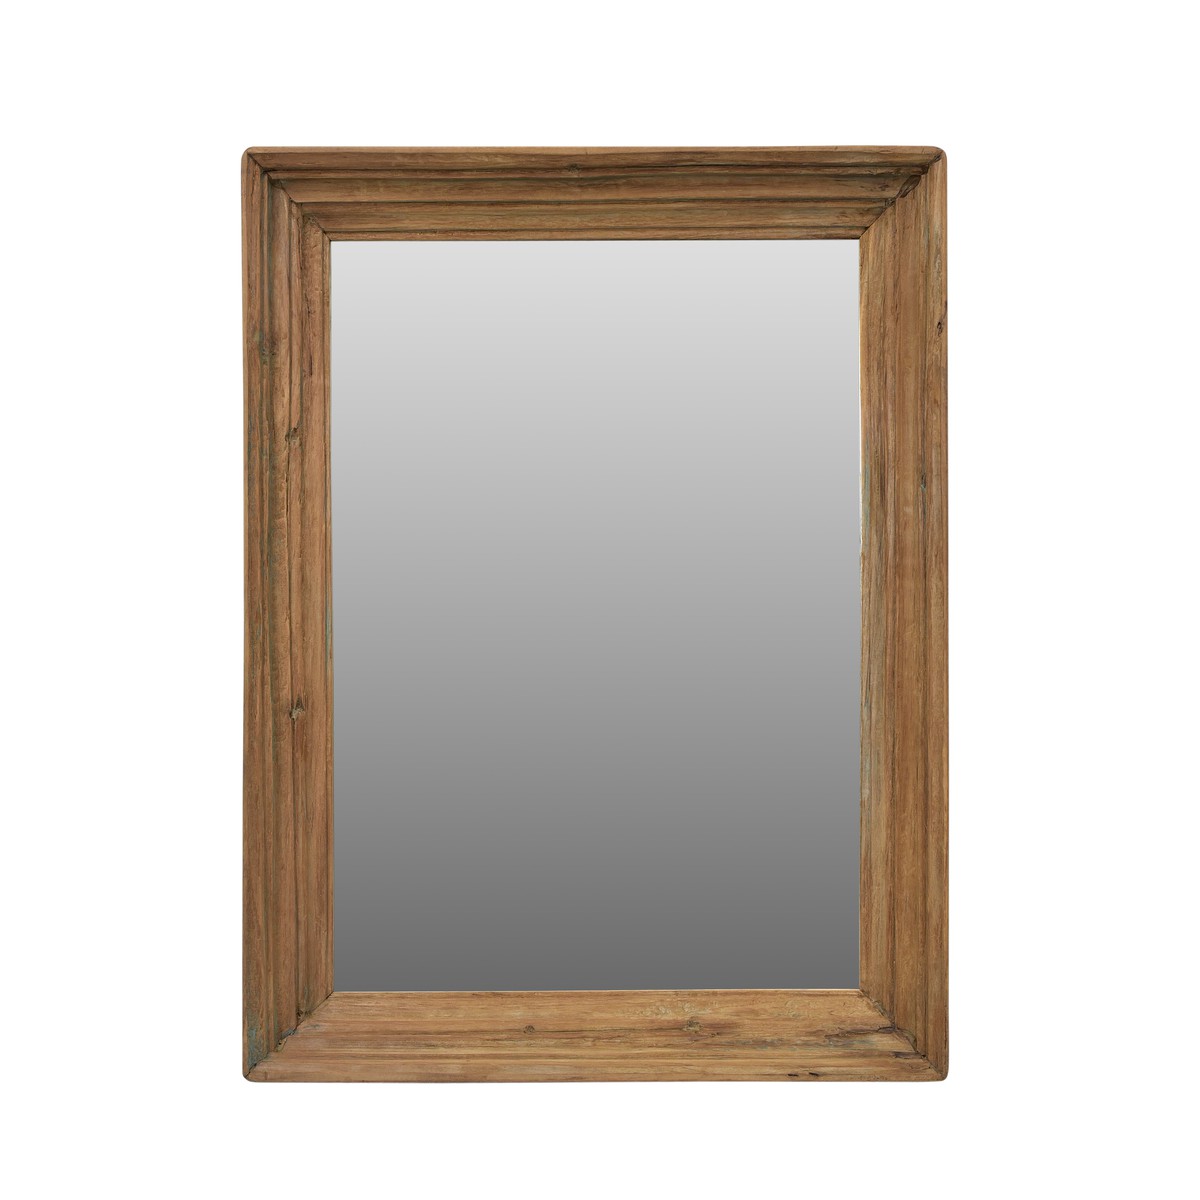 Schilliger Design  Miroir rectangle en teck ancien  45x60cm